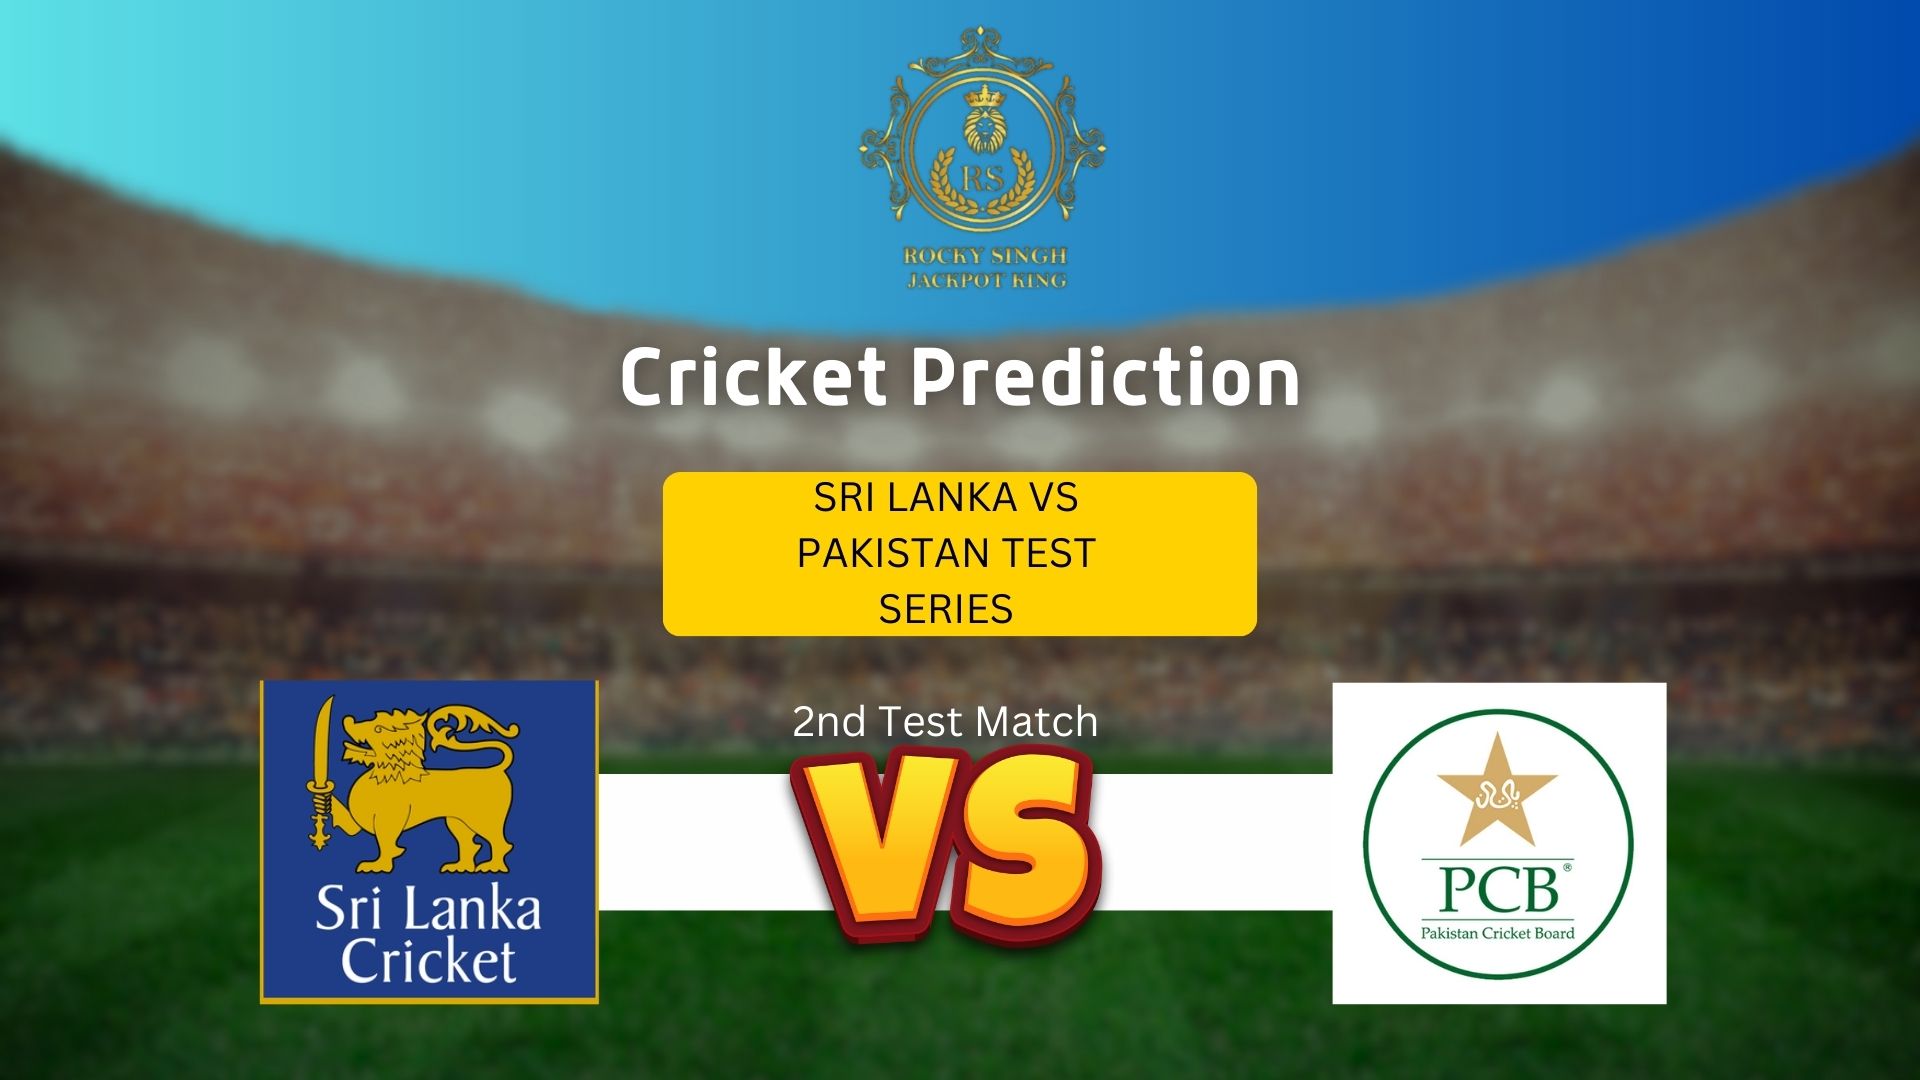 cricket test match of srilanka vs pakistan image